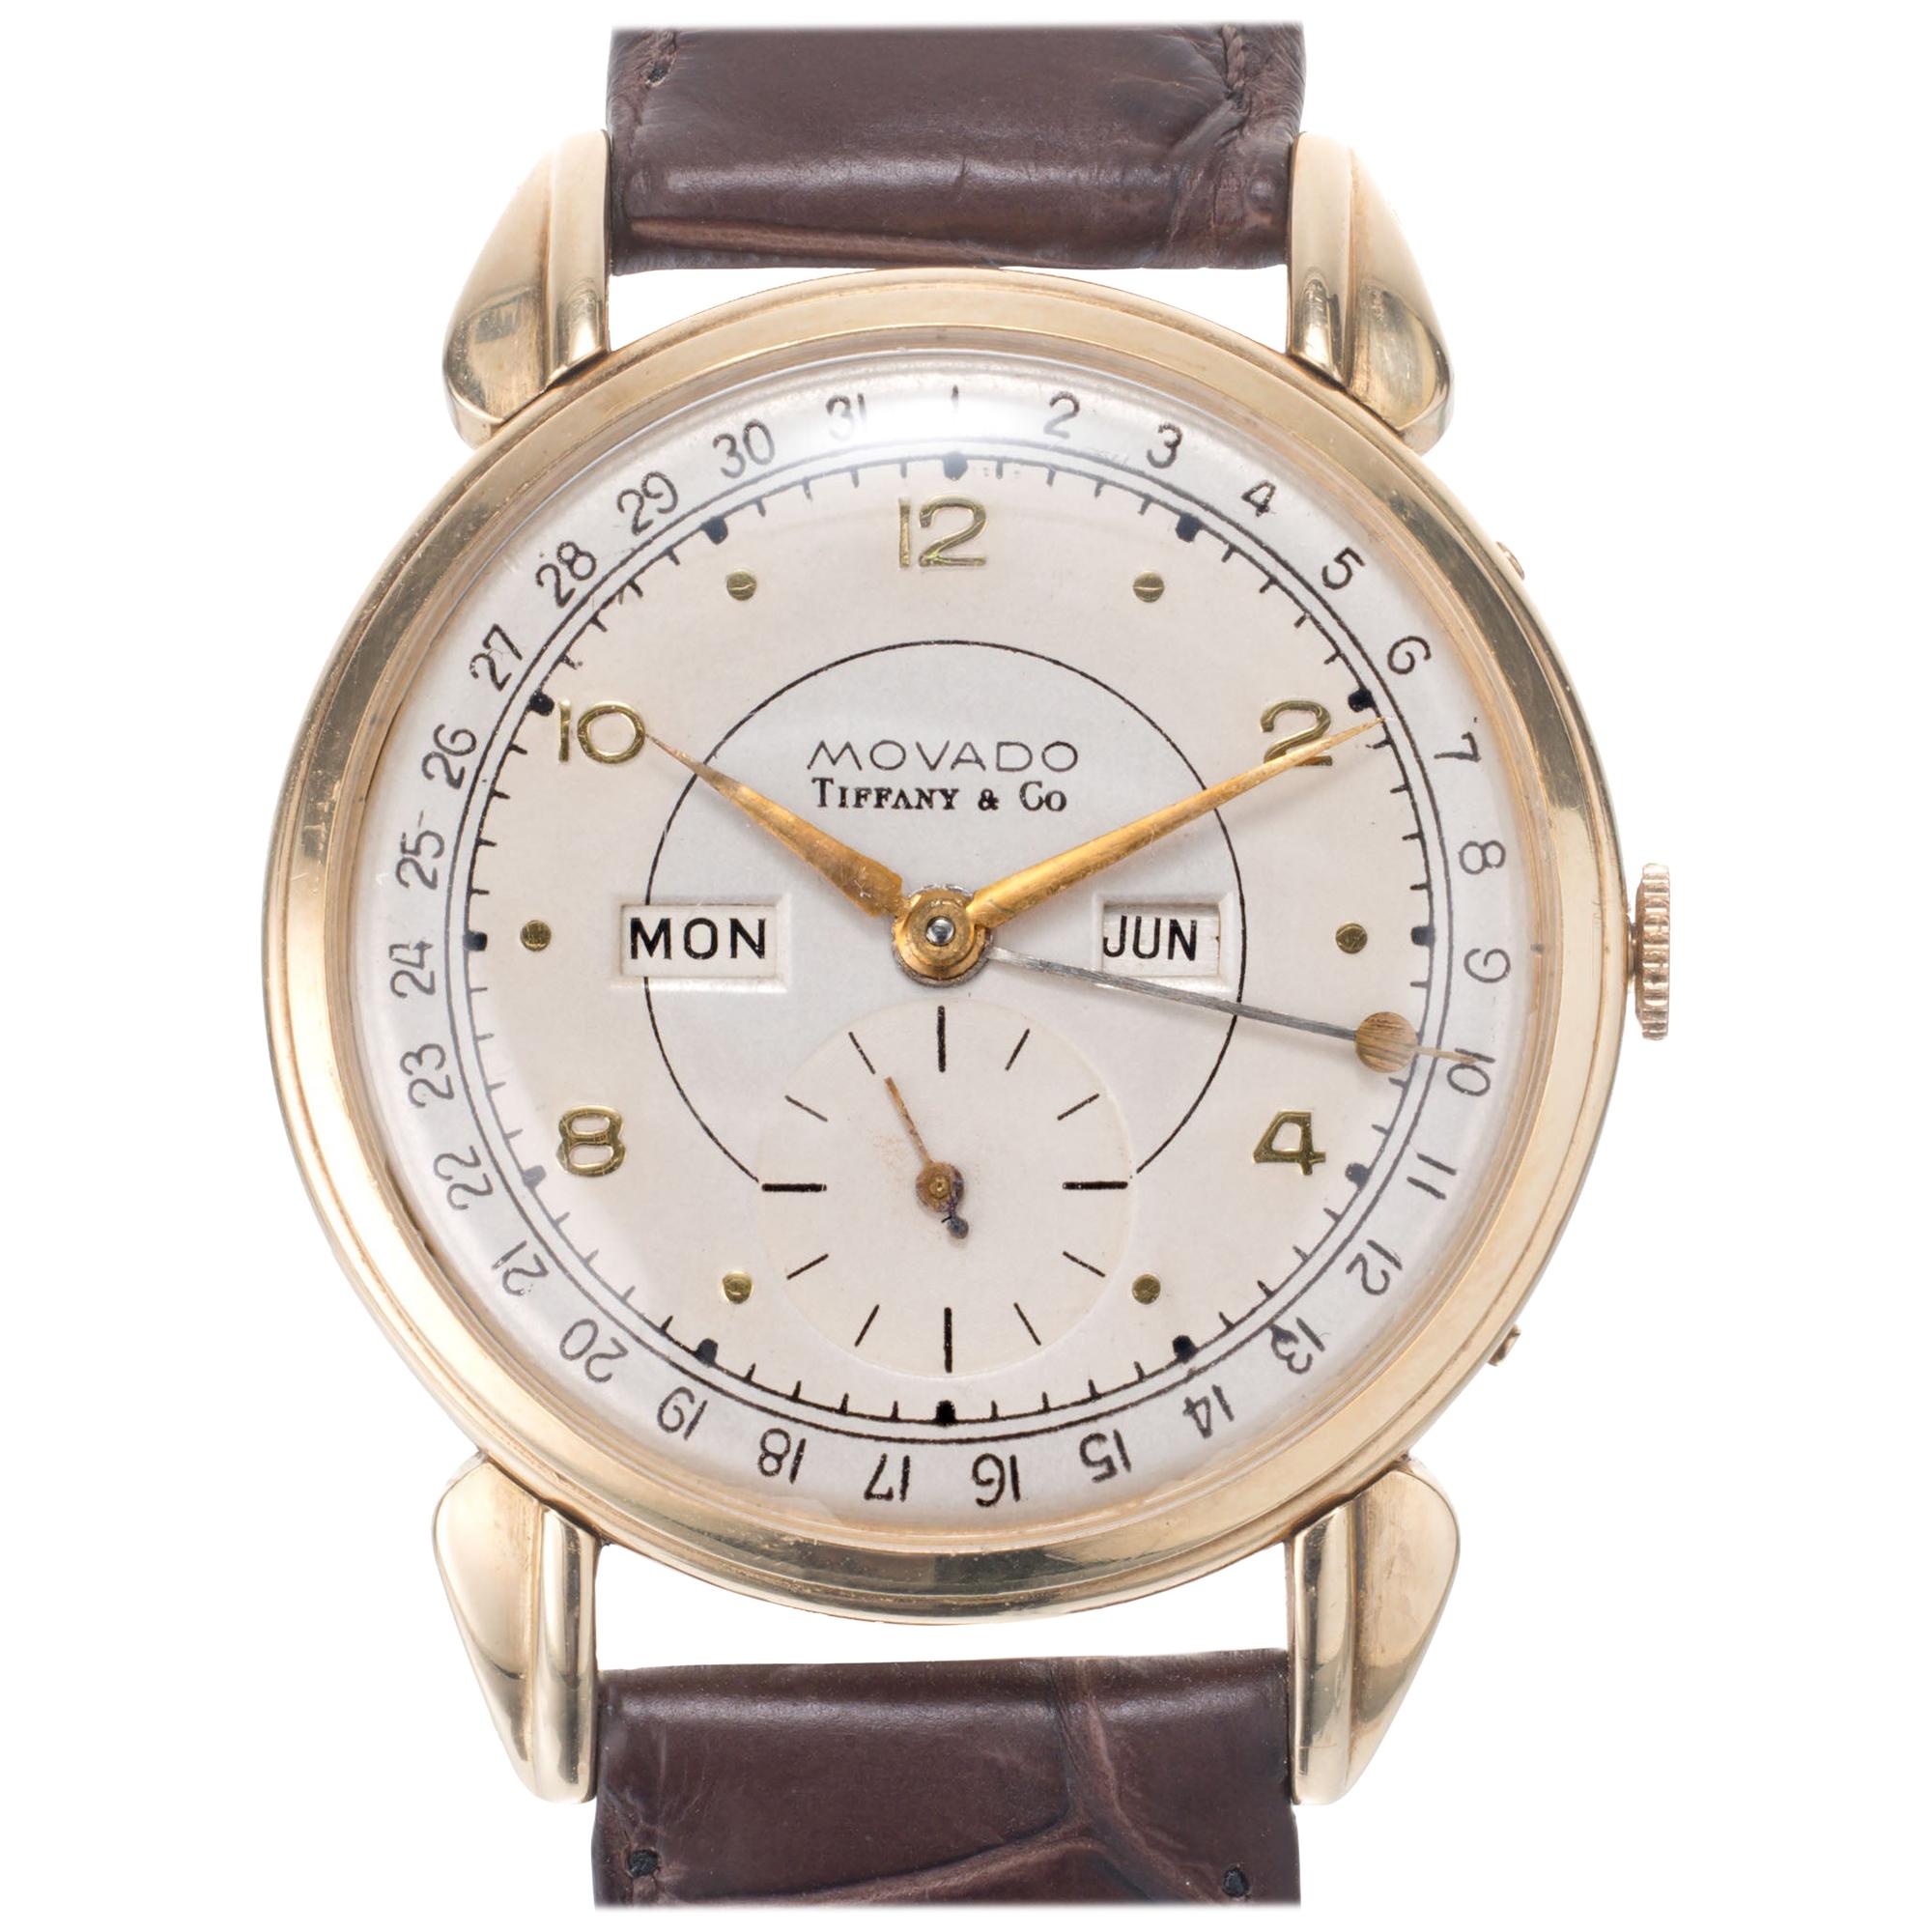 Movado Tiffany & Co. Yellow Gold Triple Calendar Wristwatch